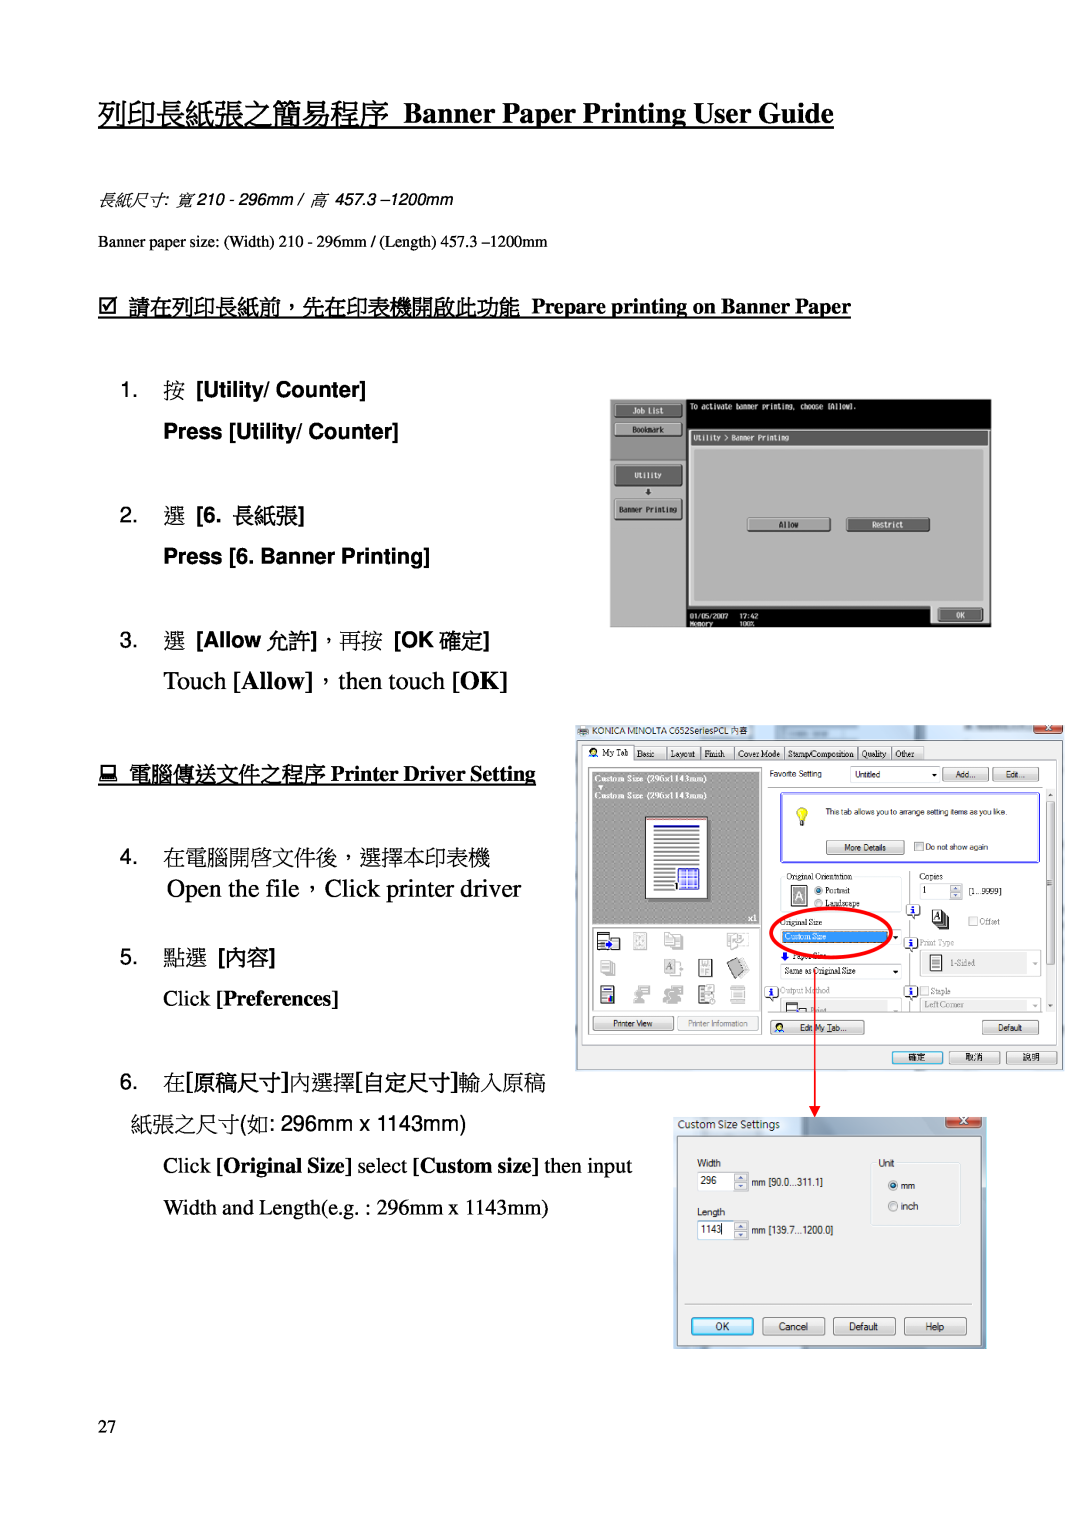 Konica Minolta C452 列印長紙張之簡易程序 Banner Paper Printing User Guide, 1. 按 Utility/ Counter Press Utility/ Counter 2. 選 6. 長紙張 